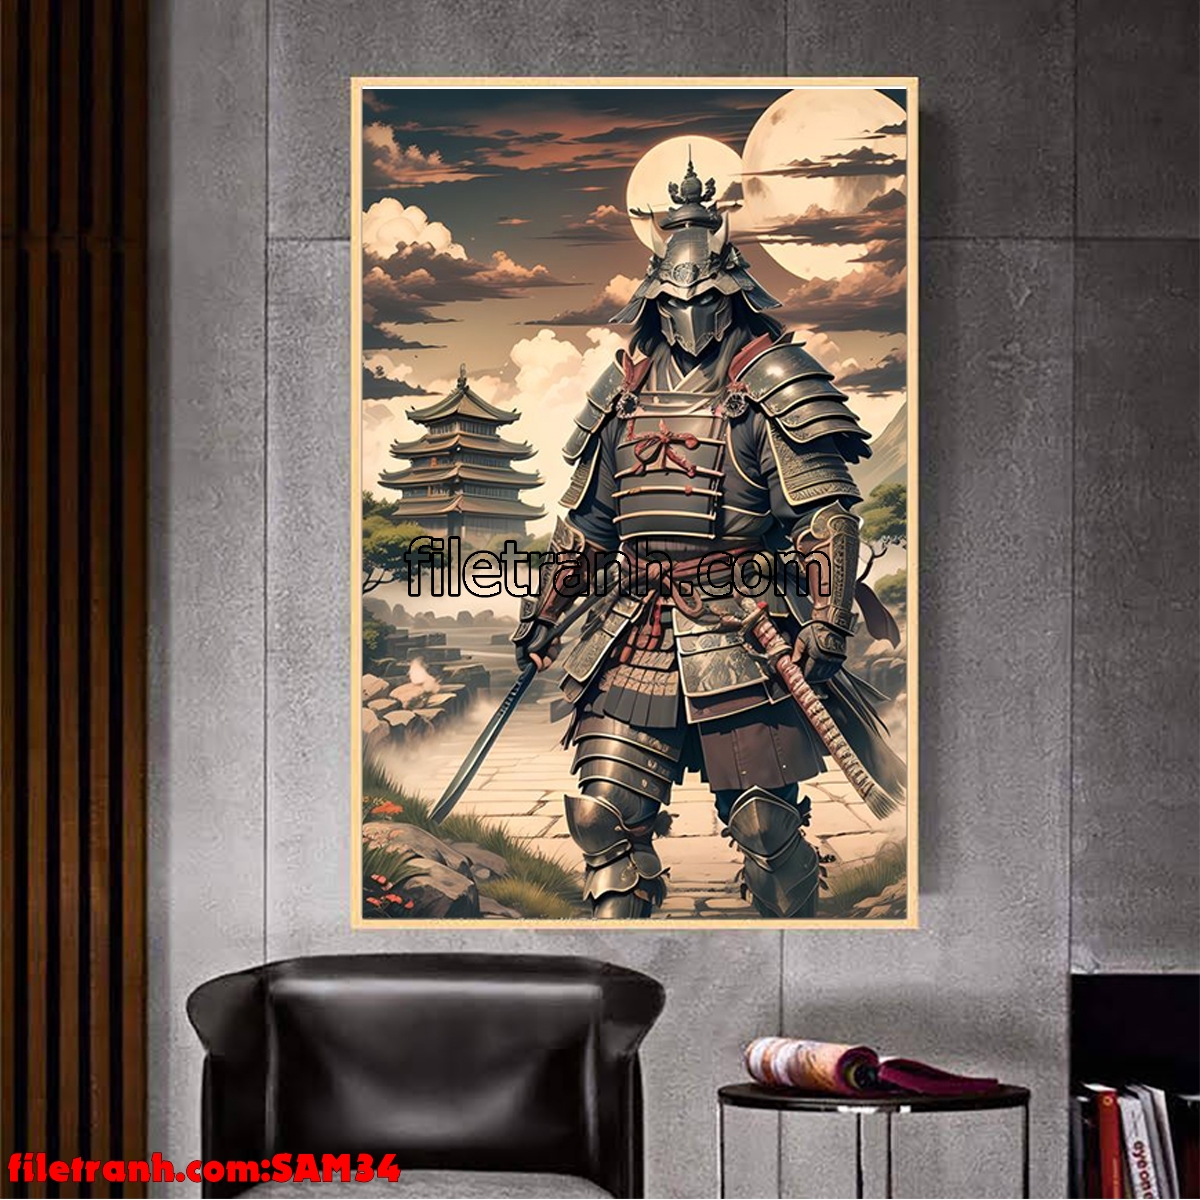 https://filetranh.com/tuong-nen/file-tranh-samurai-vo-si-nhat-ban-sam34.html